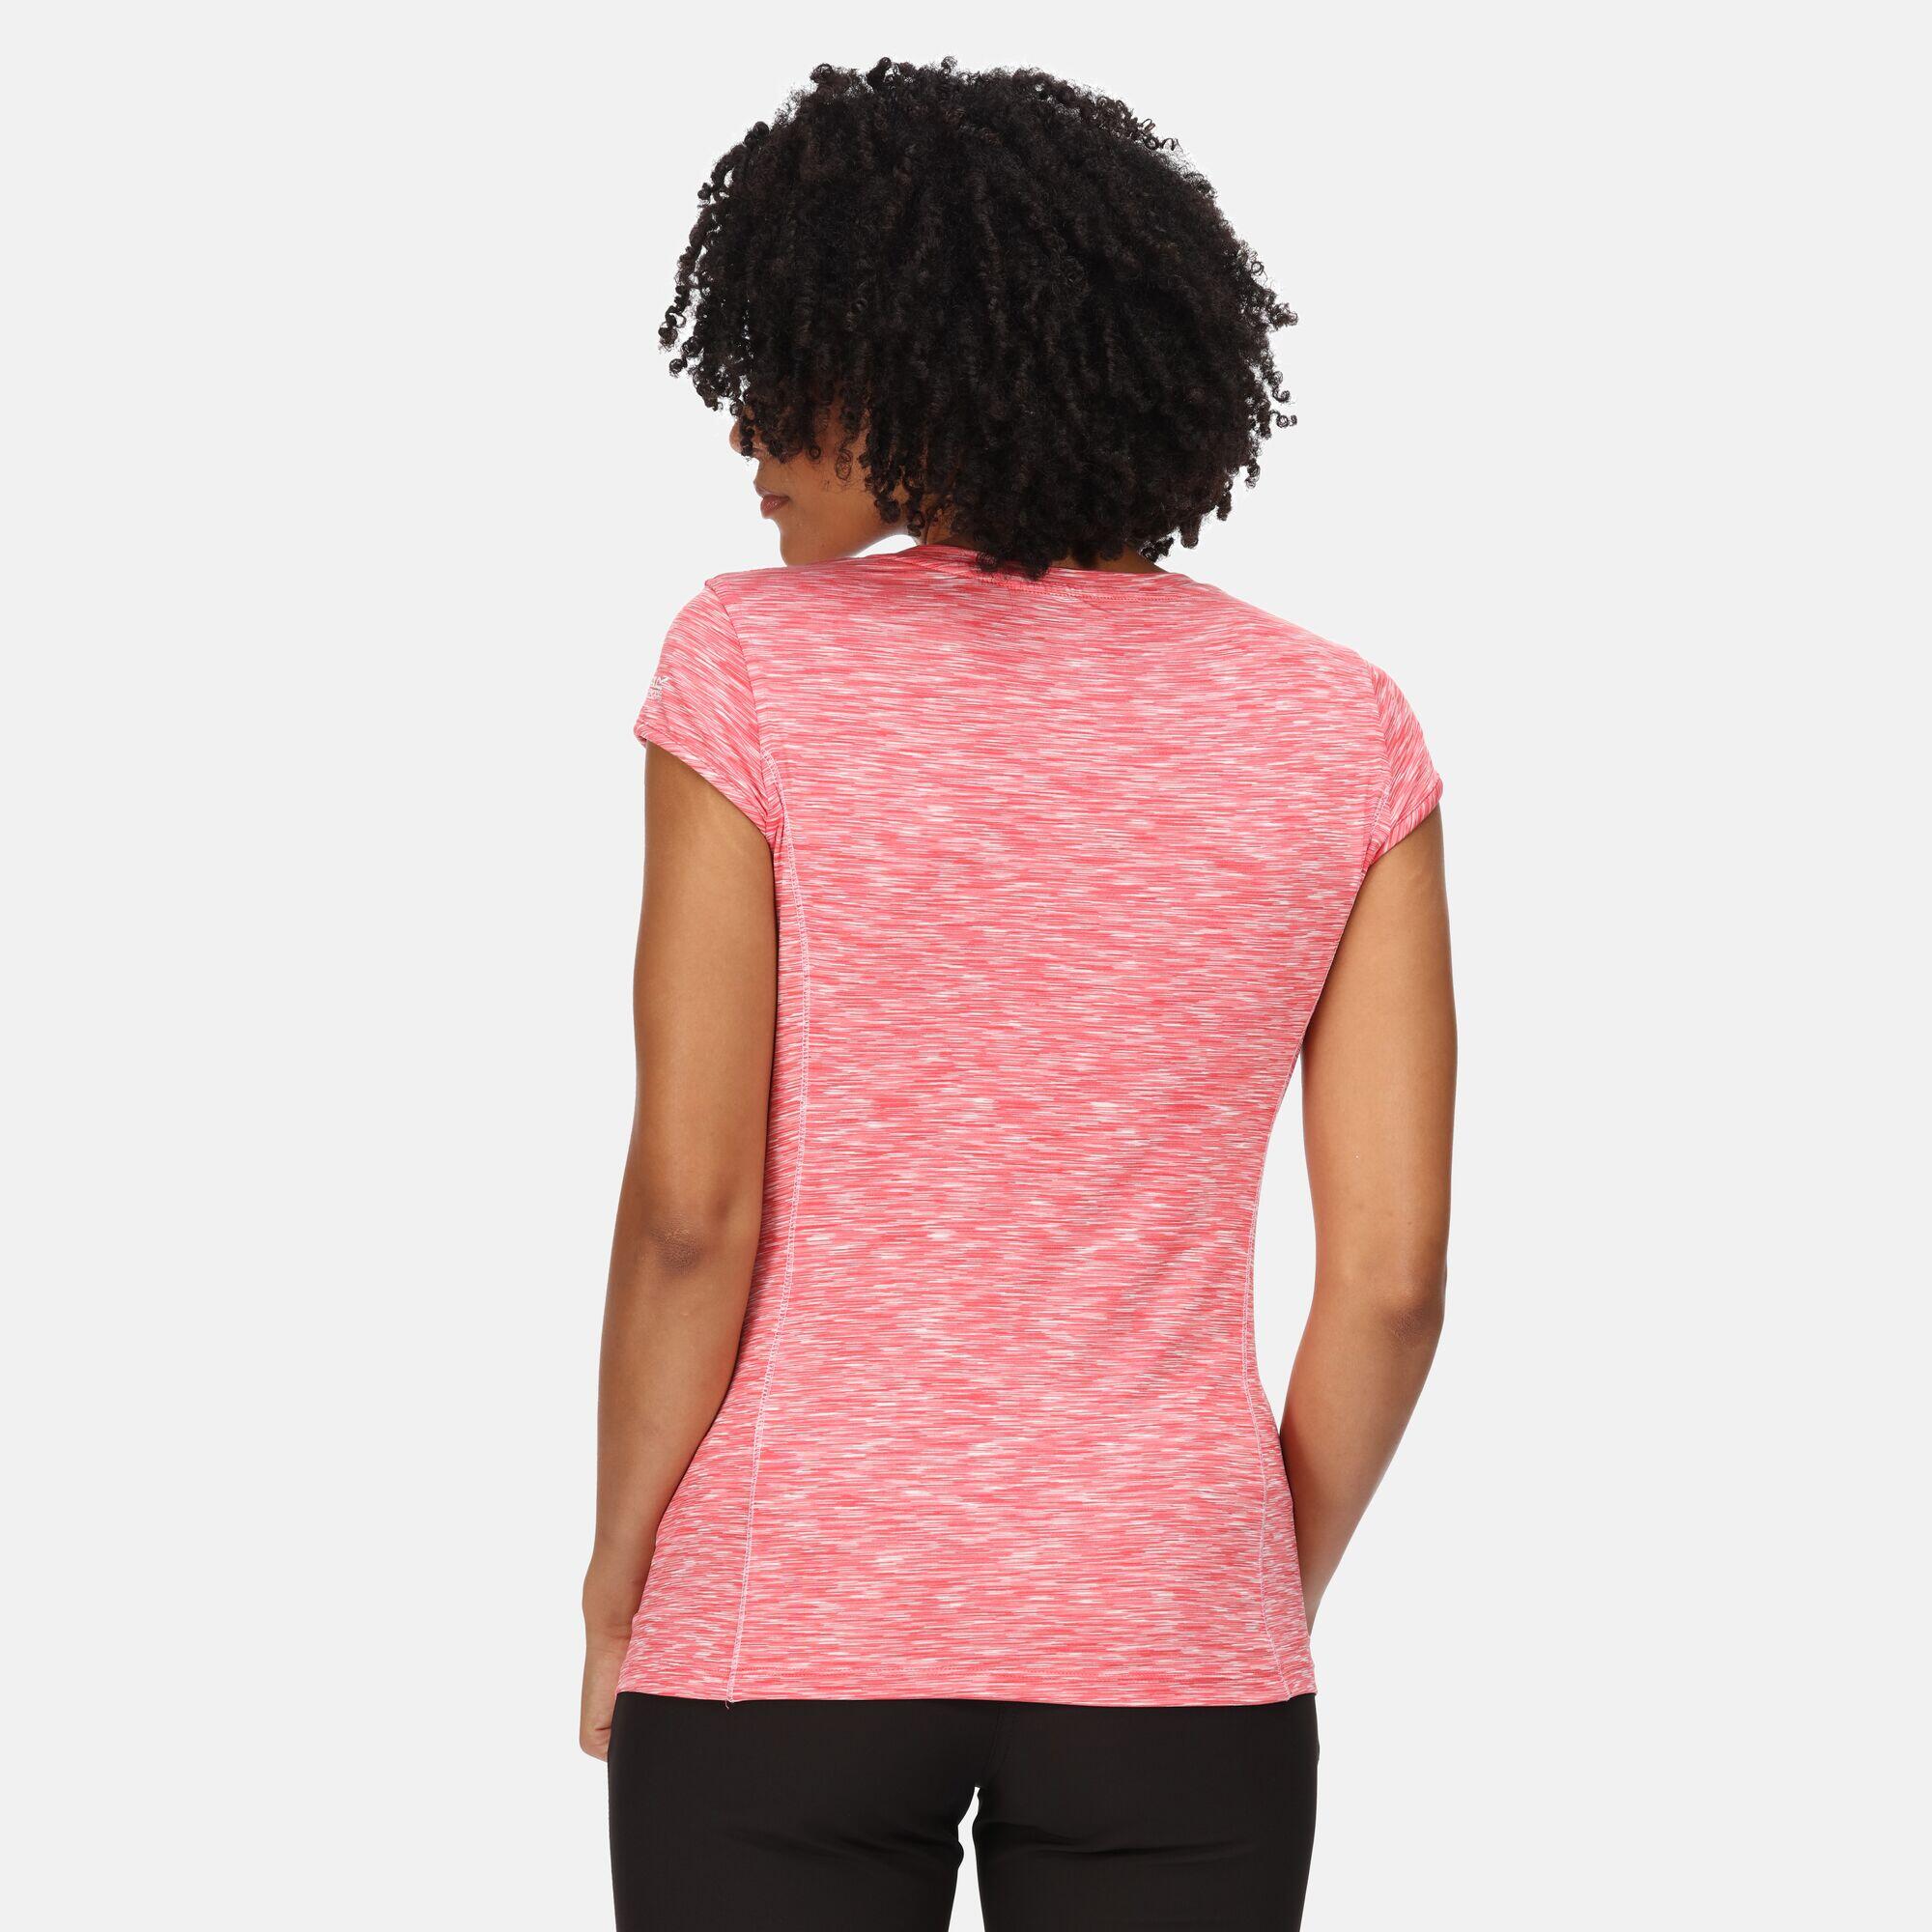 Hyperdimension II Women's Walking T-Shirt - Tropical Pink 2/7